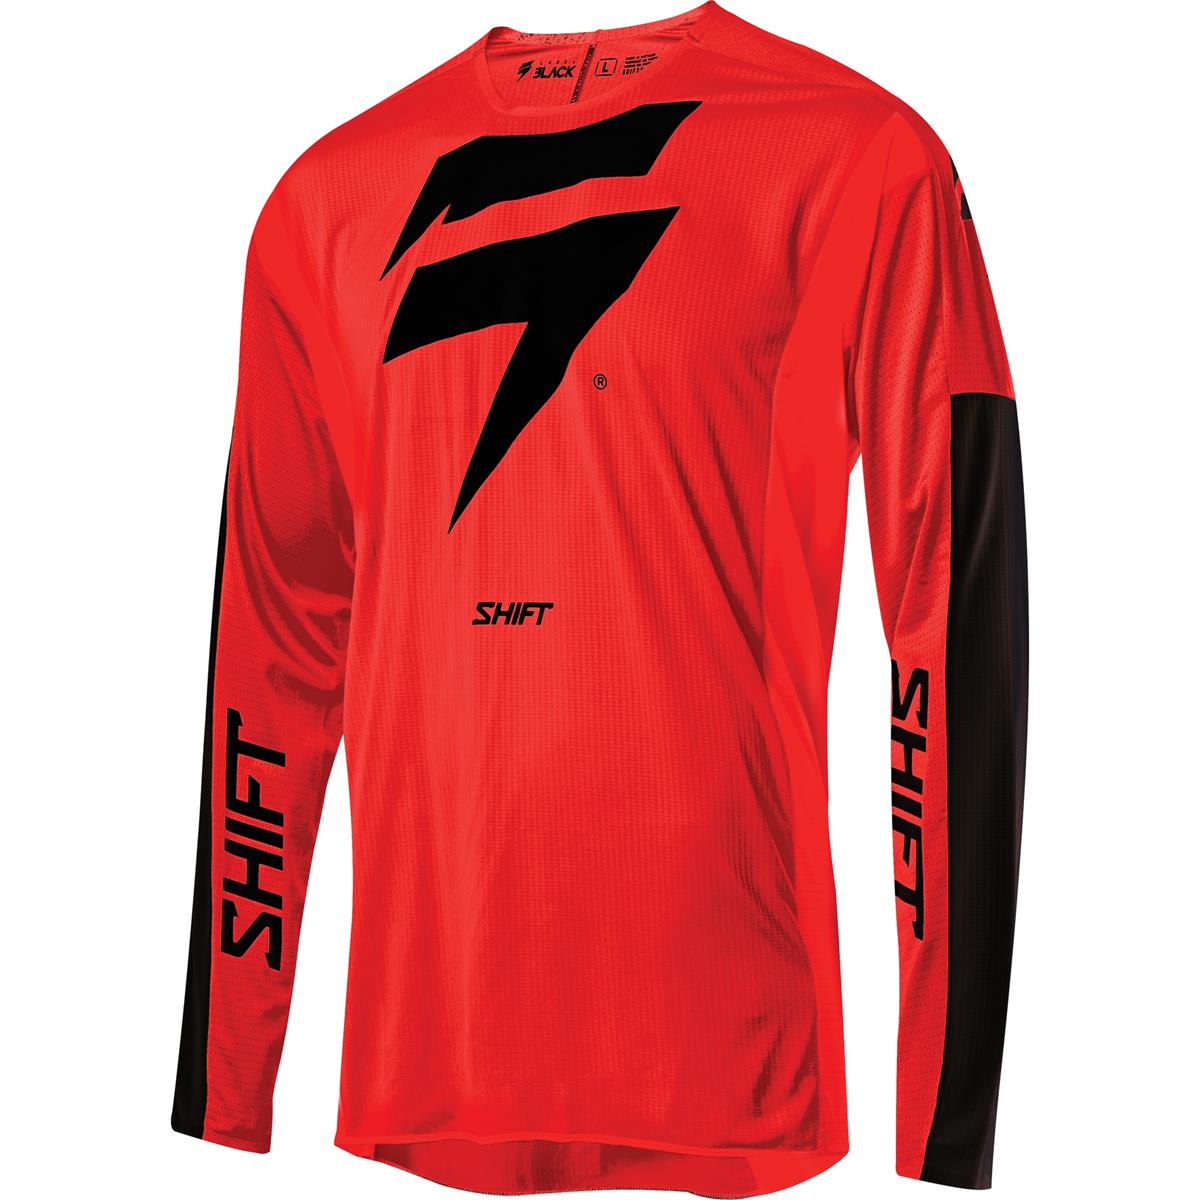 Shift Jersey 3lack Label Race Red/Black